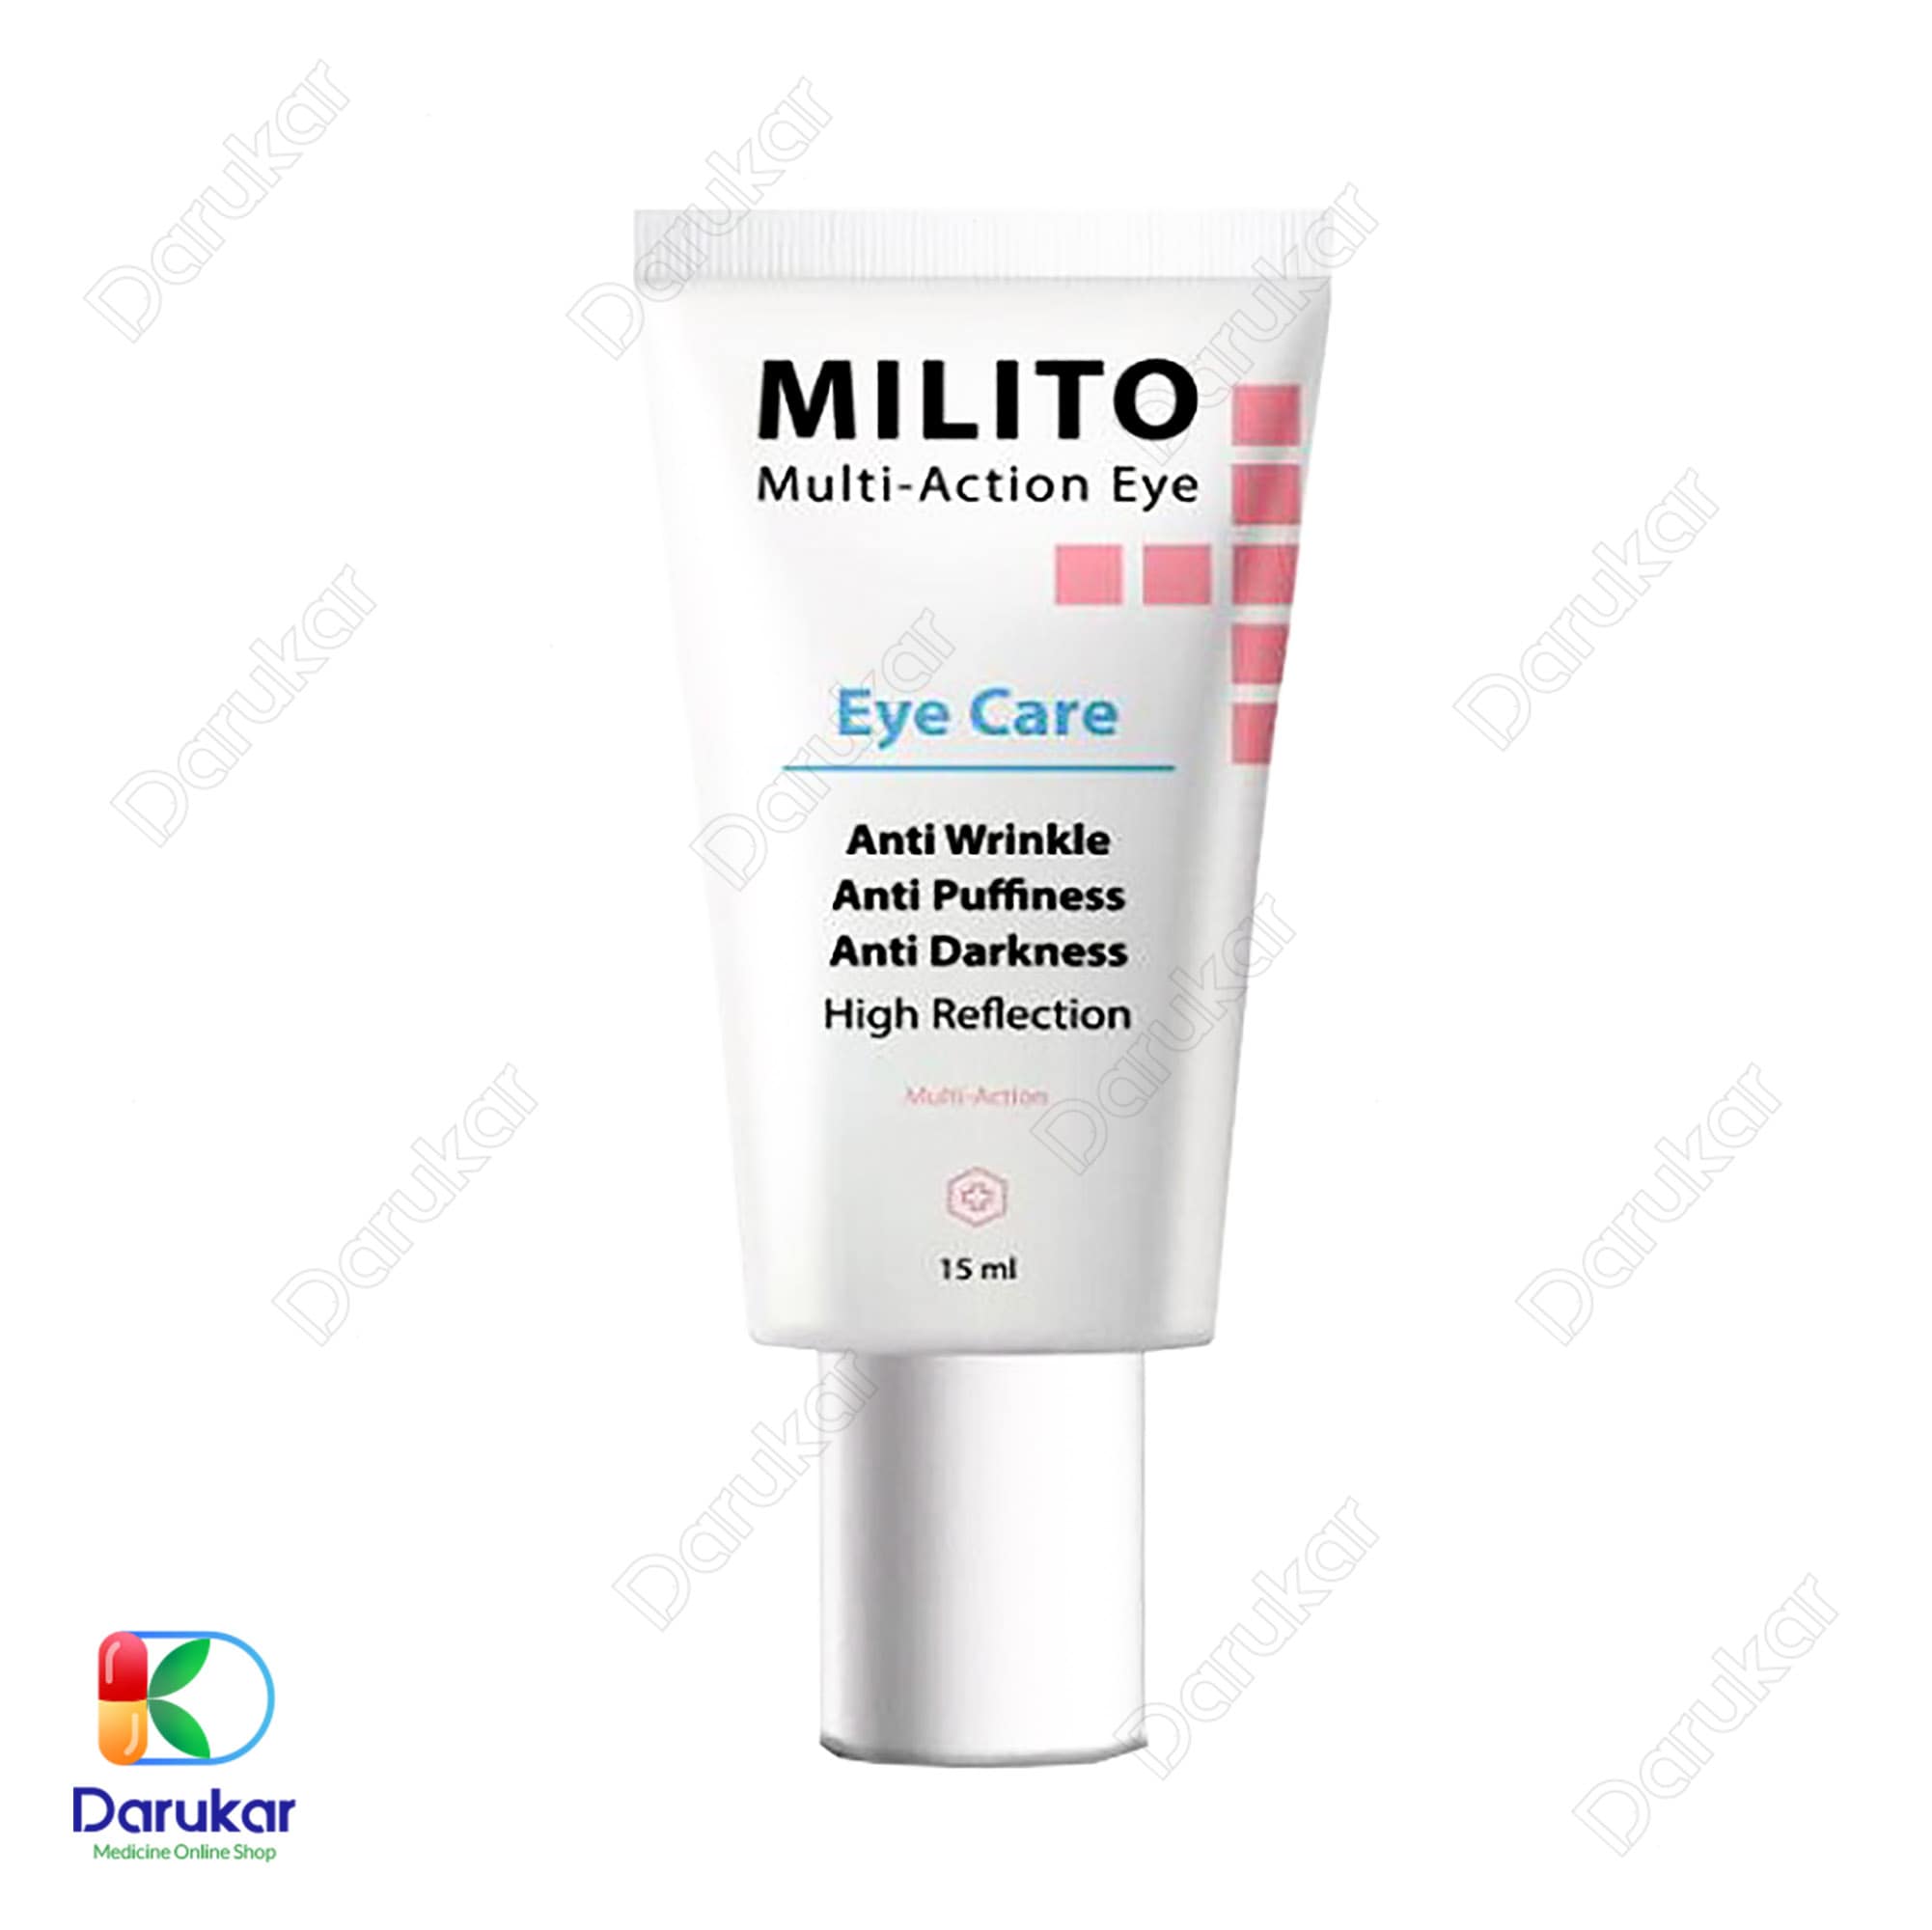 Milito Multi Action Eye Care Cream 15 ml 1